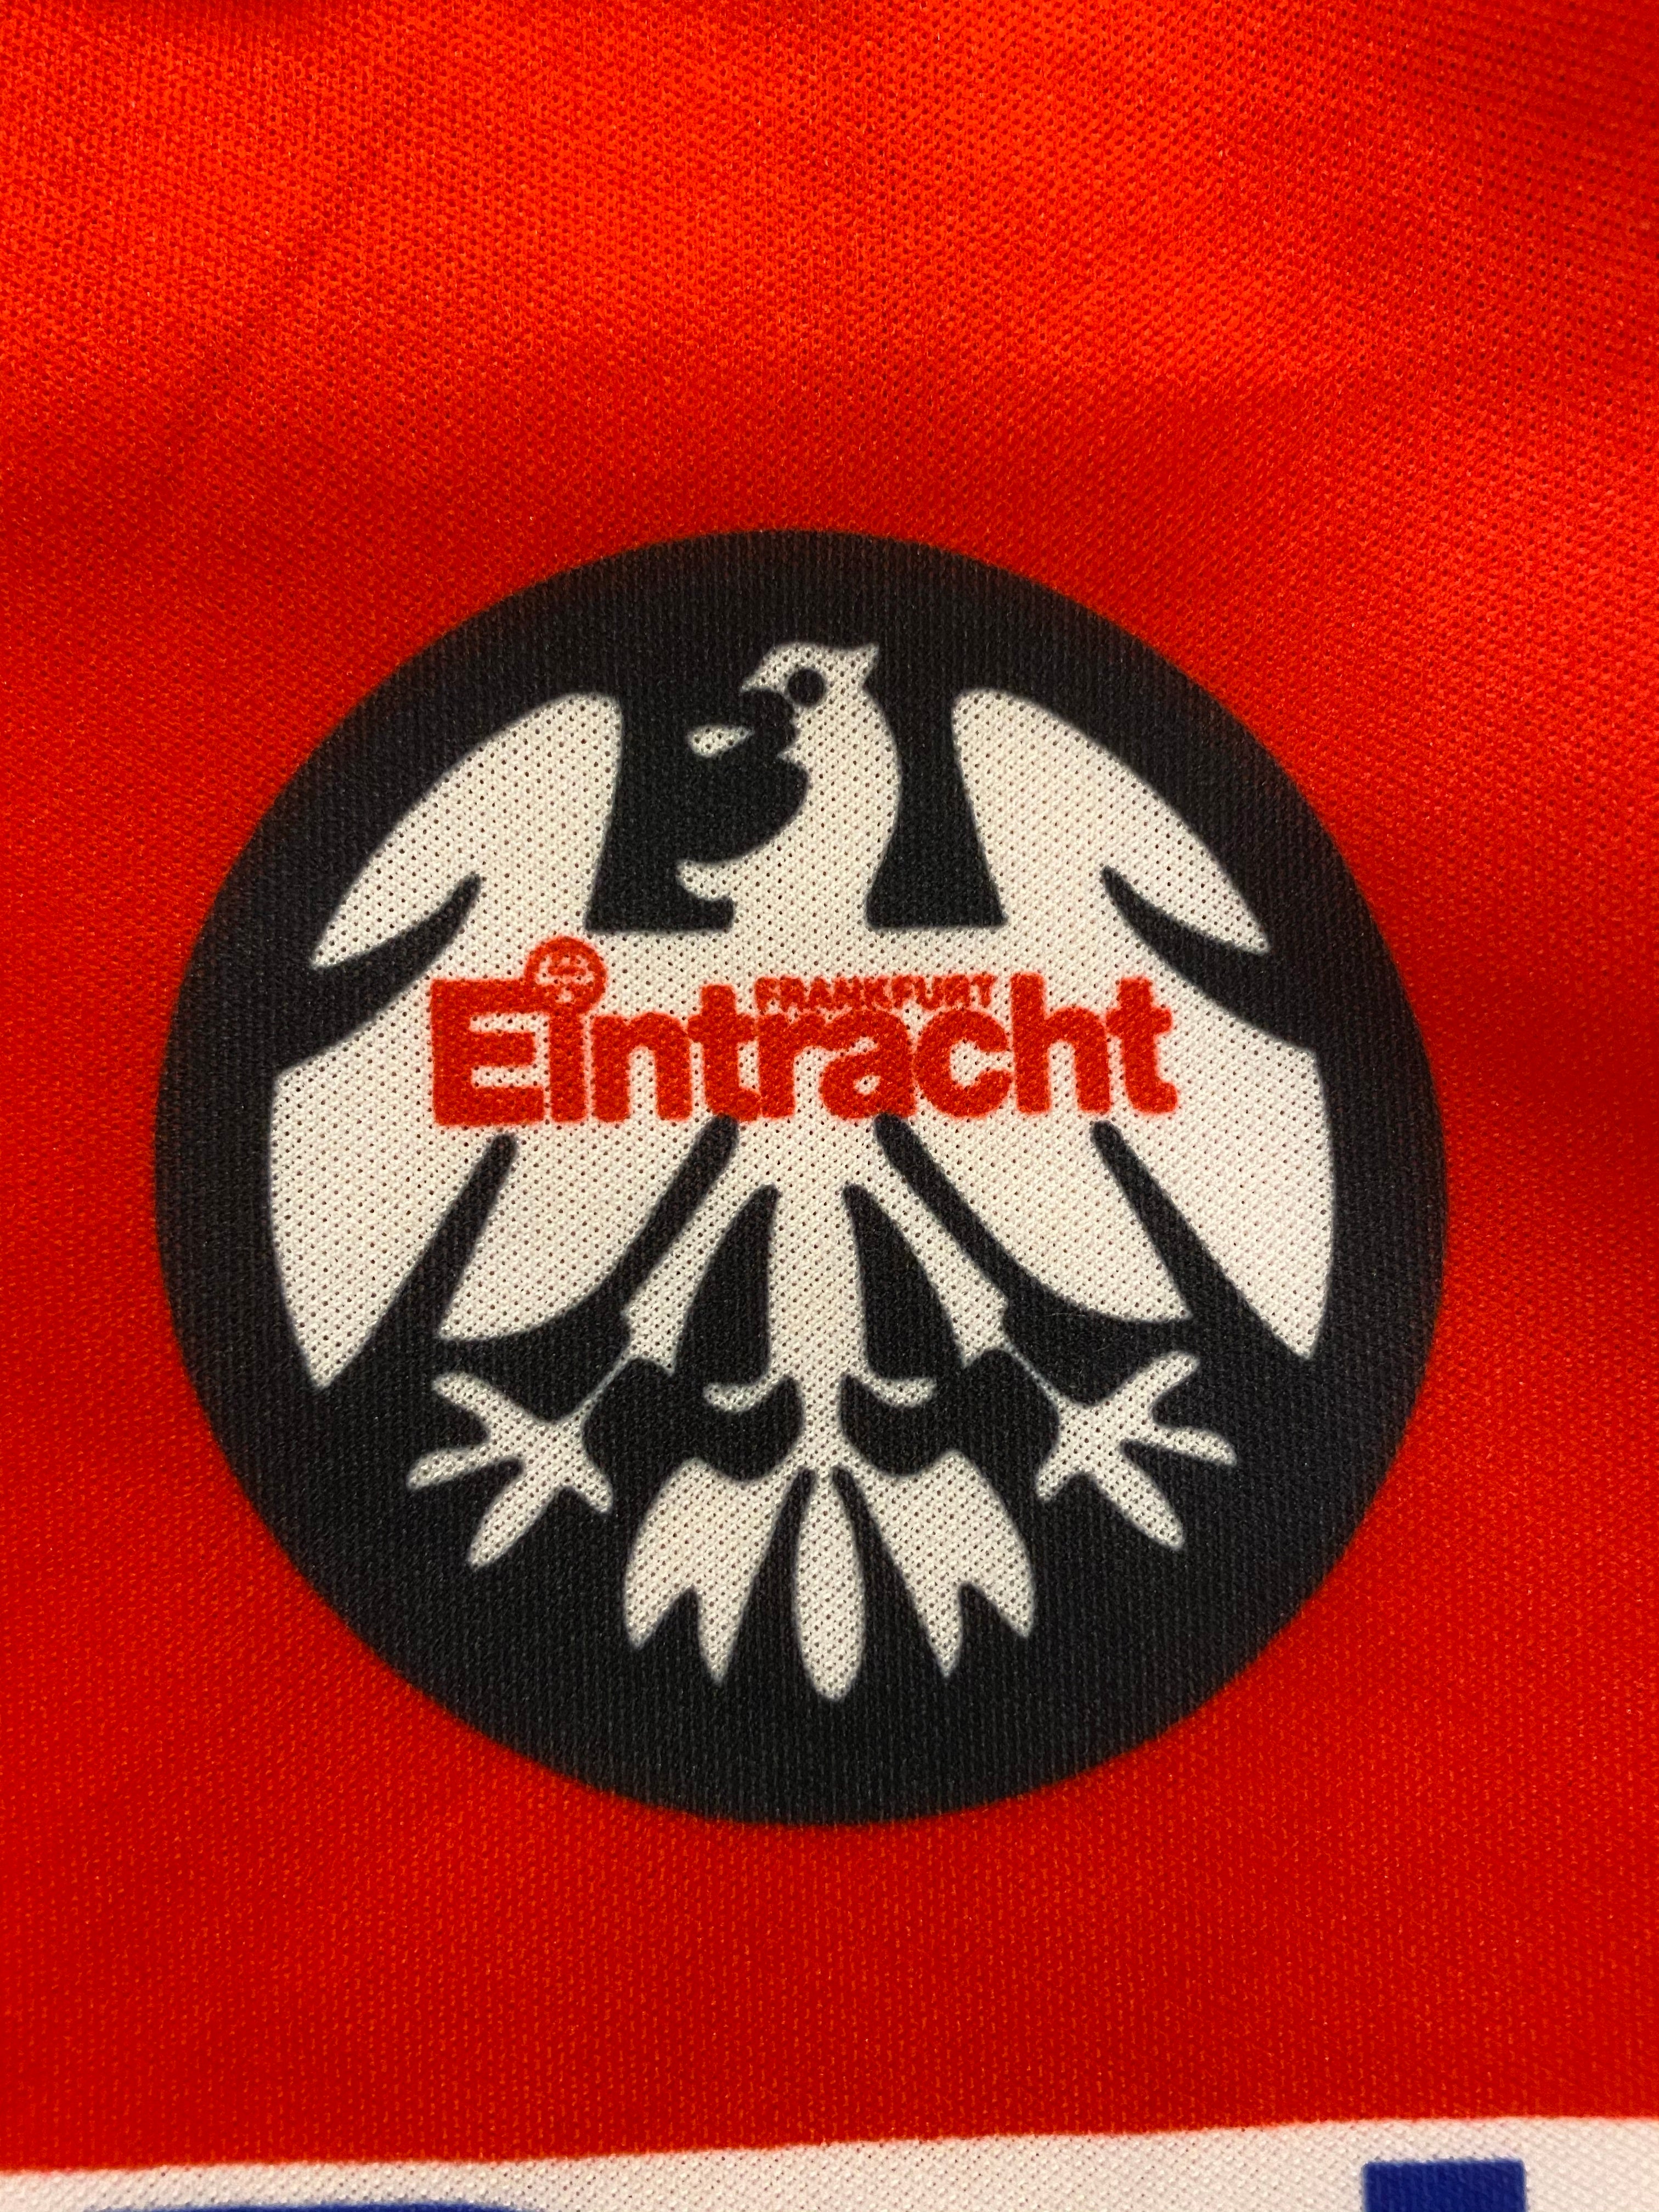 1993/94 Camiseta local del Eintracht Frankfurt L/S (XS) 8.5/10